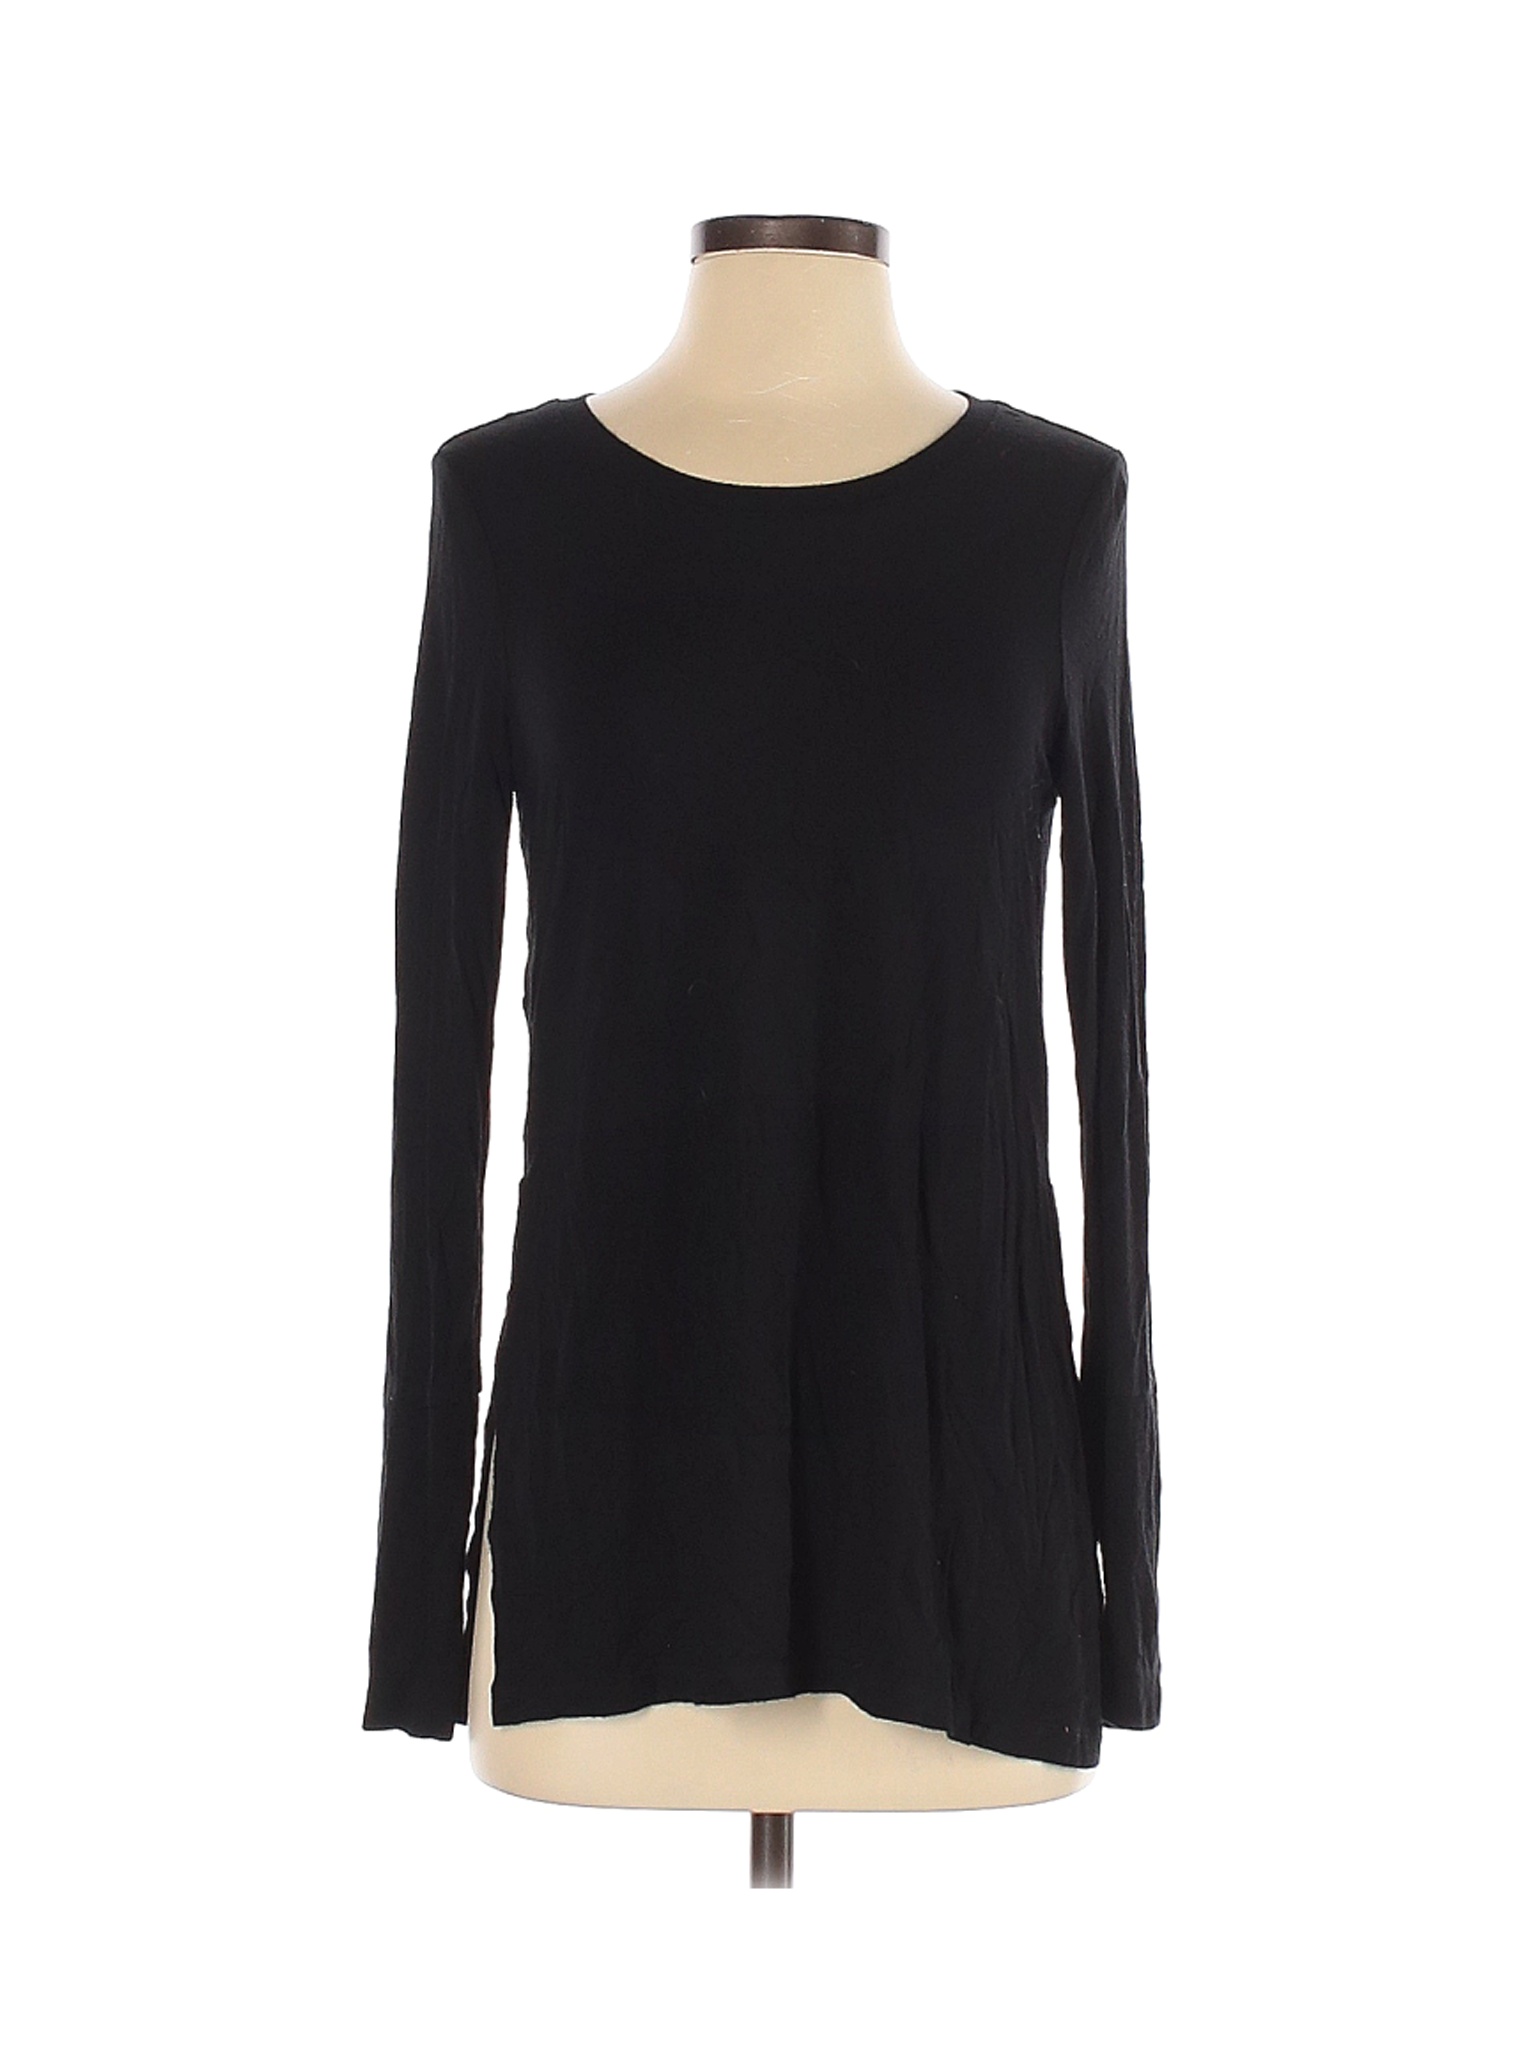 Tahari Women Black Long Sleeve T-Shirt S | eBay